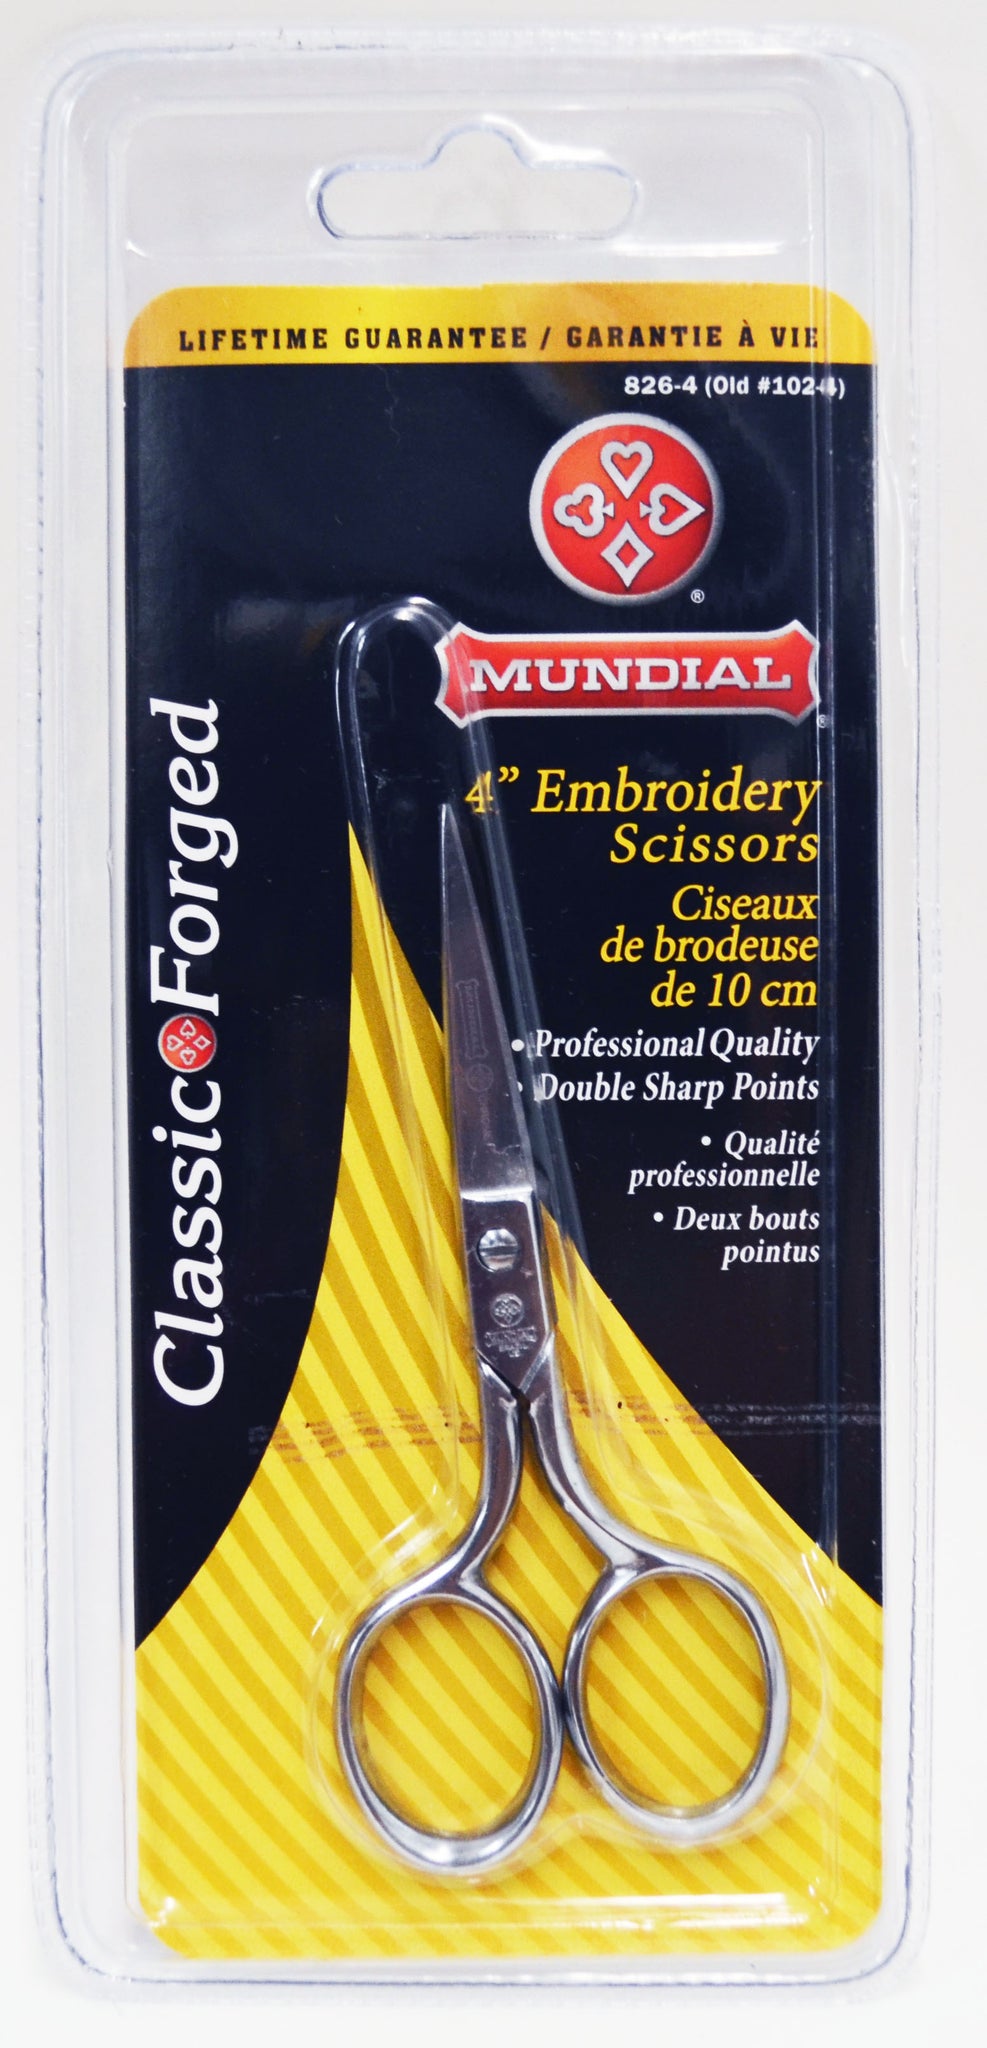 Mundial Embroidery Scissors - 4"